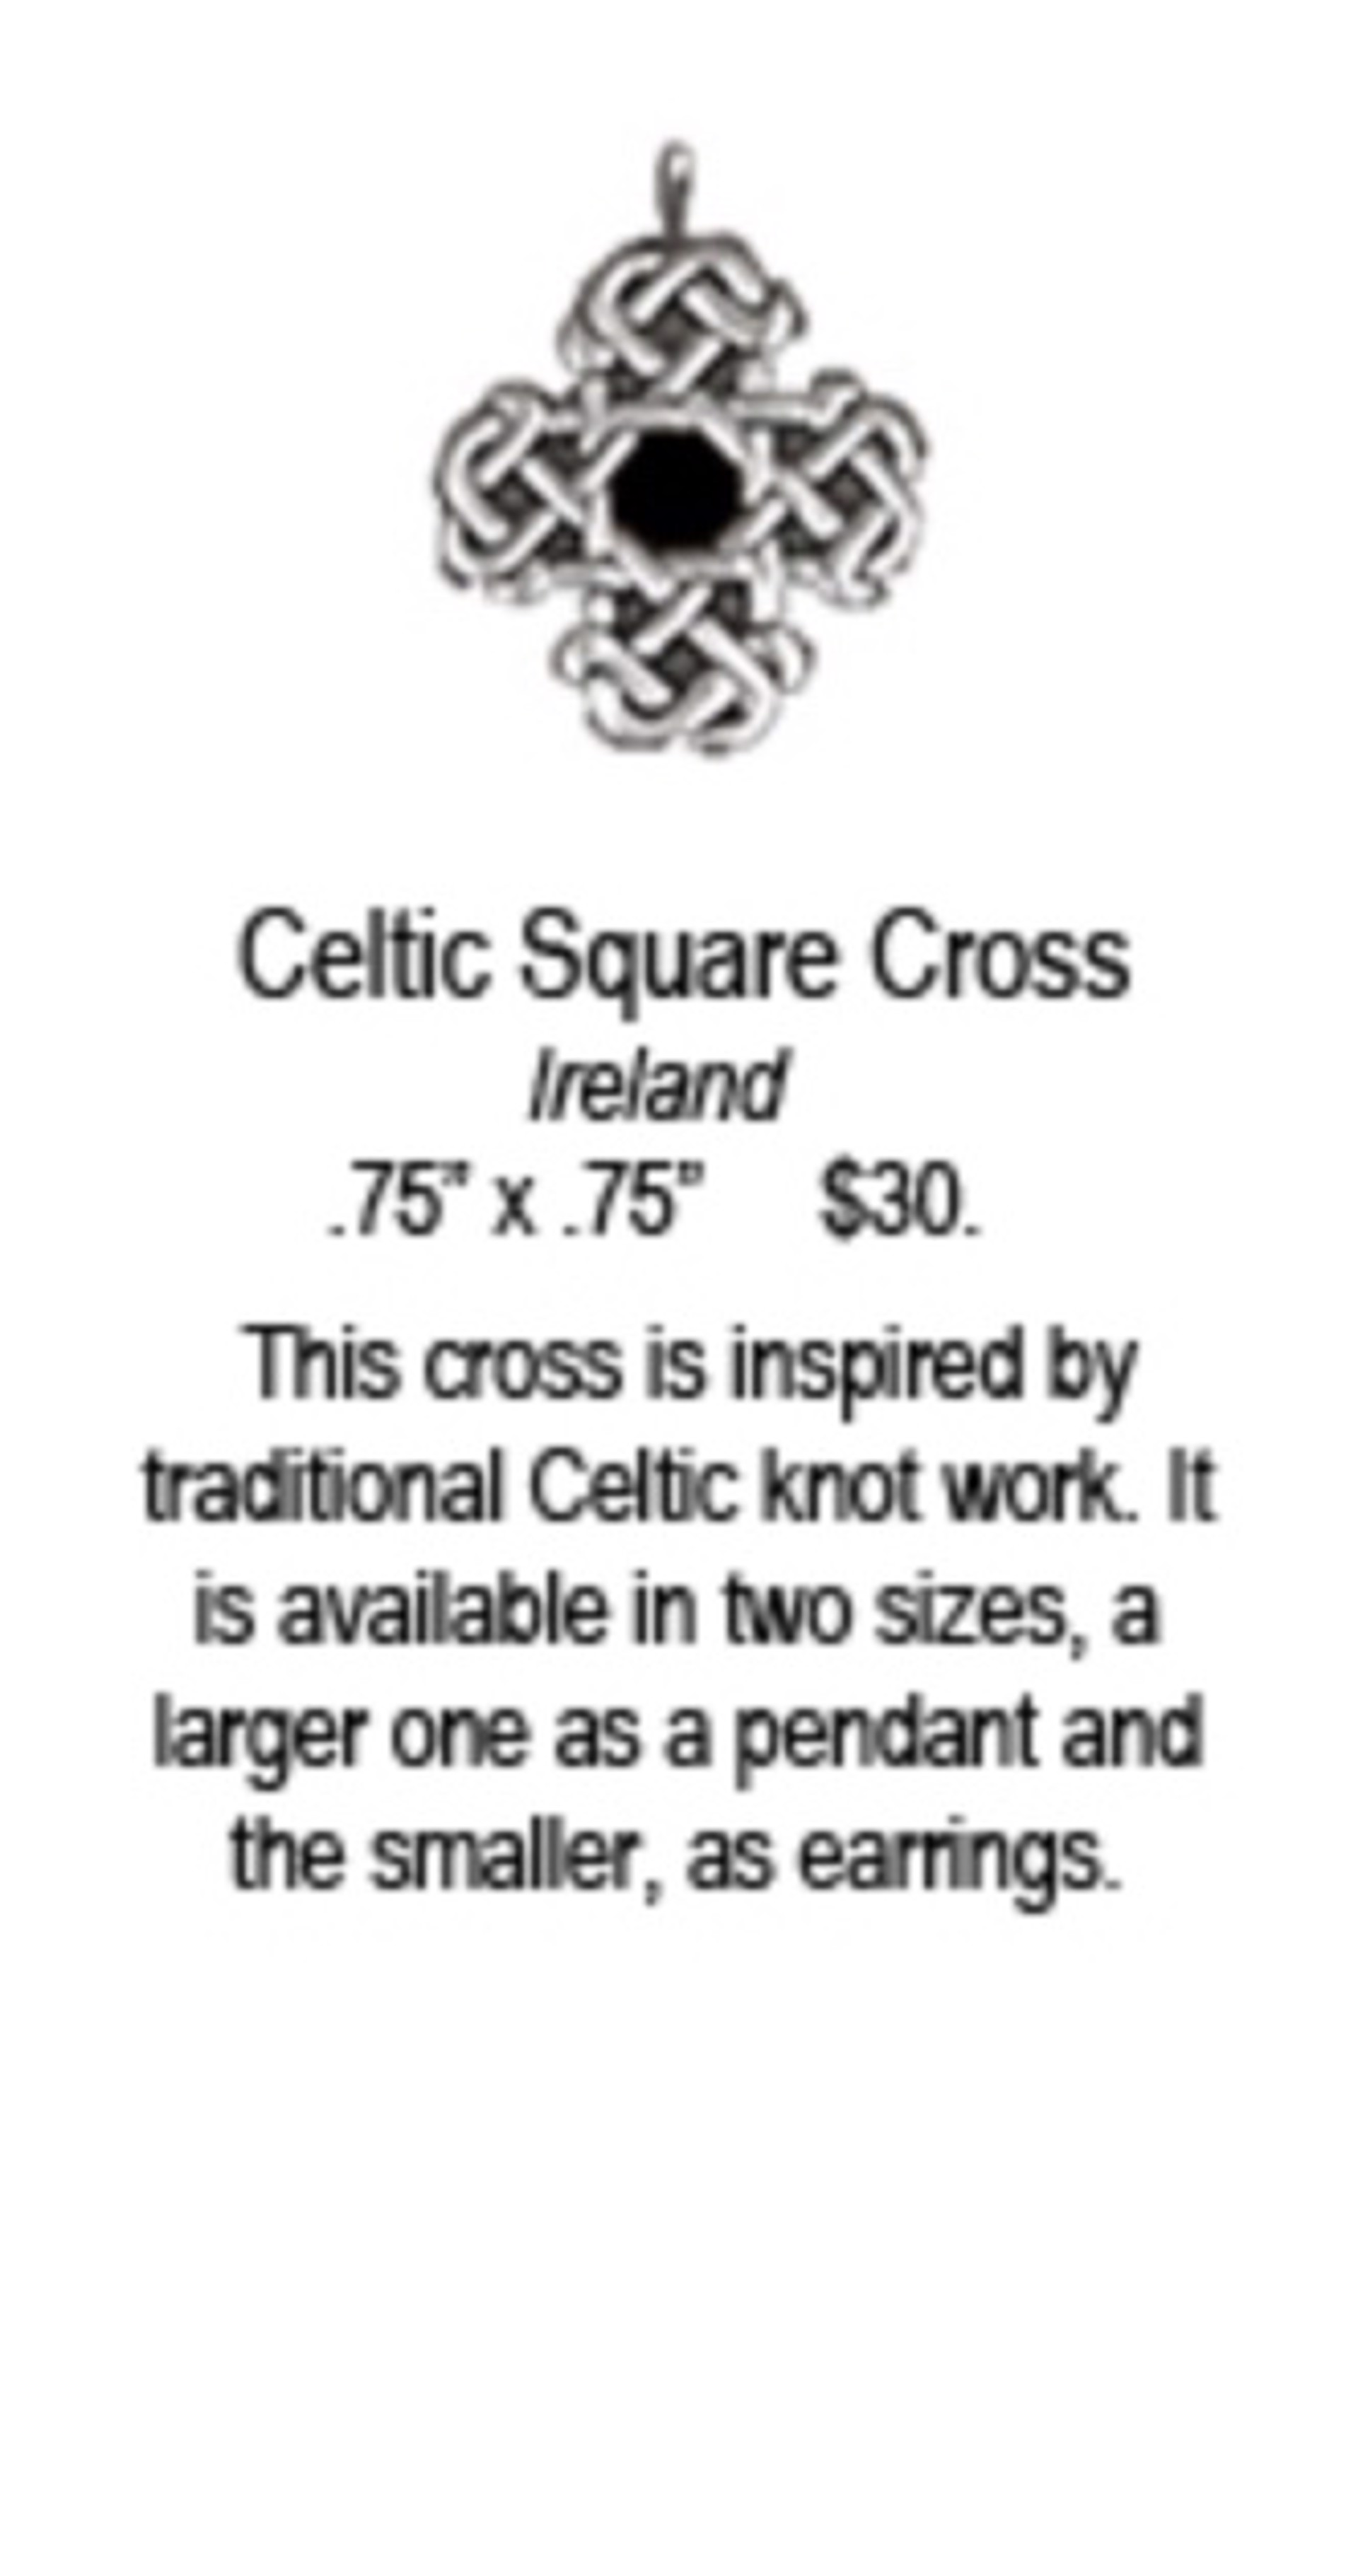 Pendant - Celtic Square Cross 9560 by Deanne McKeown